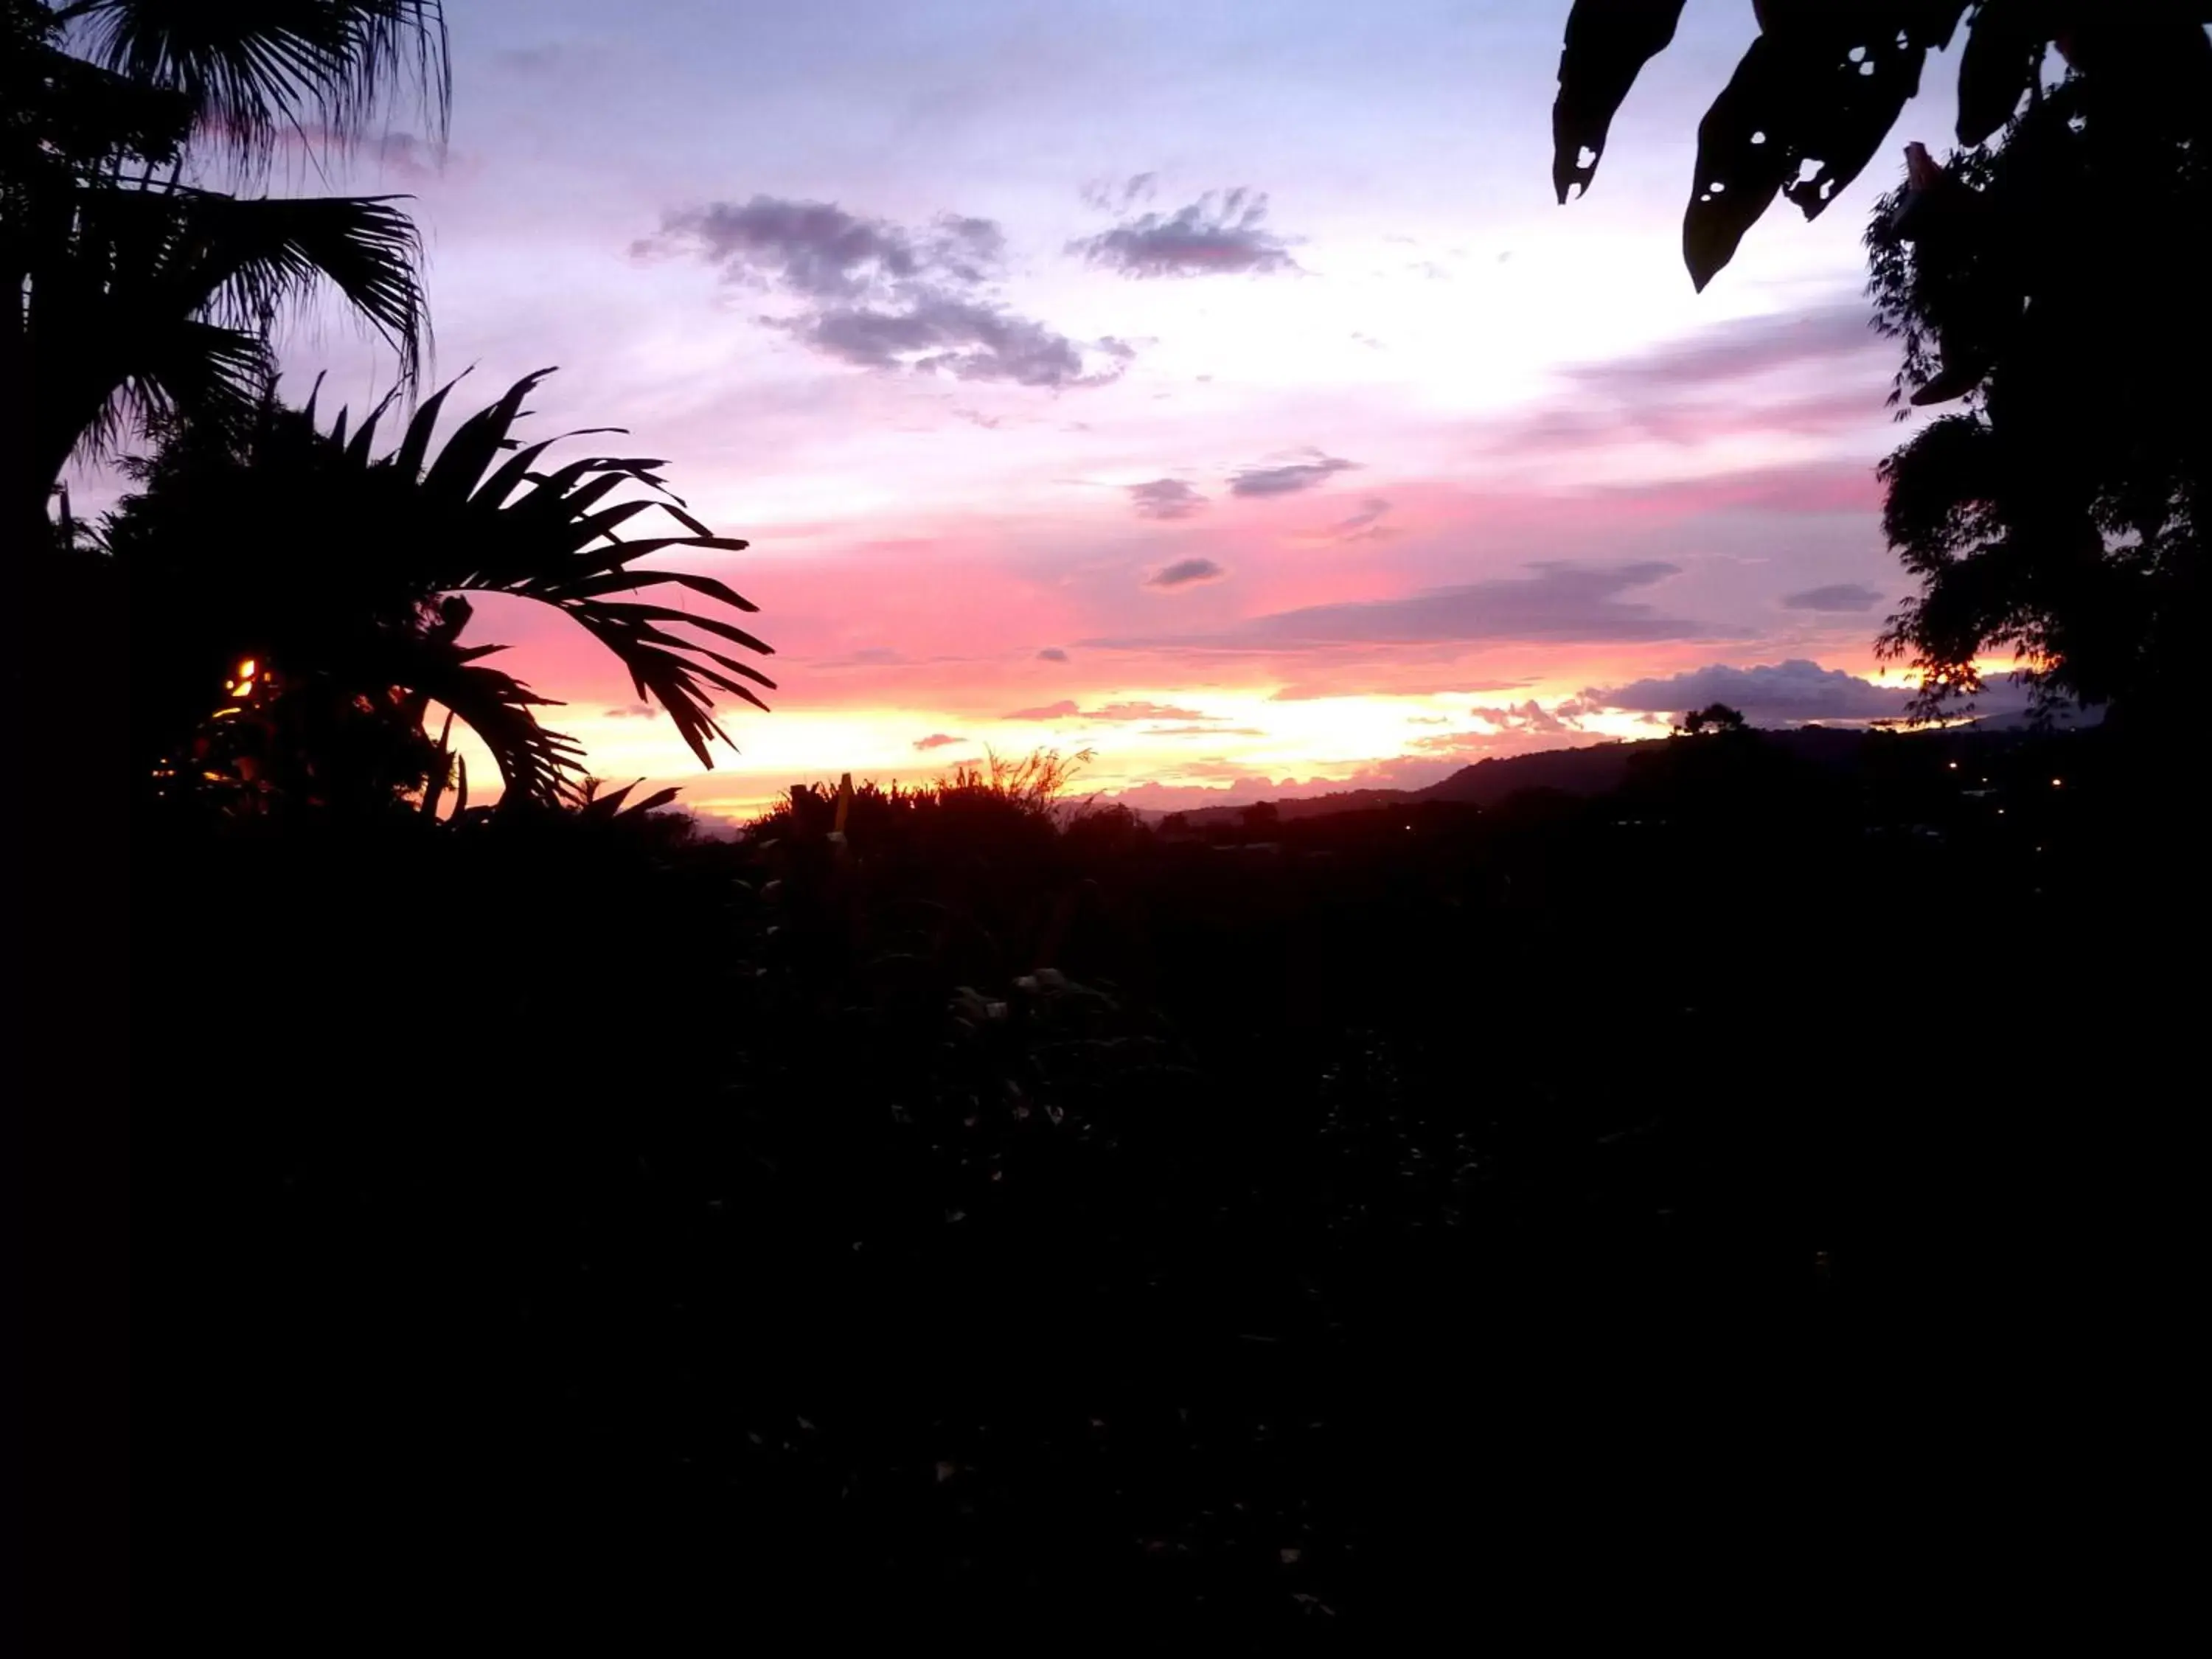 Garden view, Sunrise/Sunset in Pura Vida Hotel